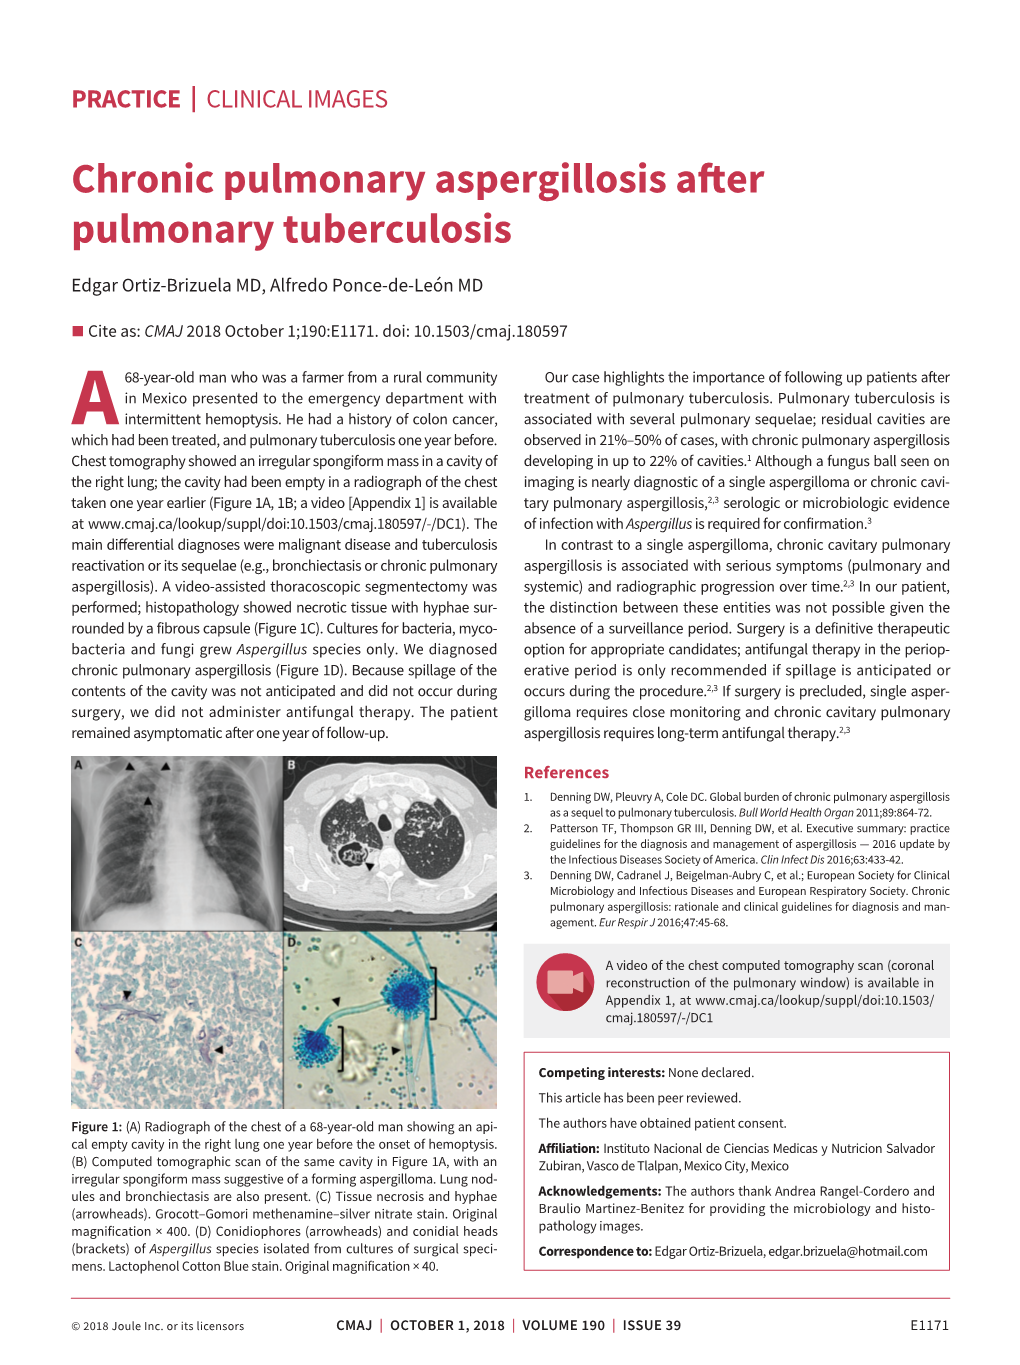 Chronic Pulmonary Aspergillosis After Pulmonary Tuberculosis